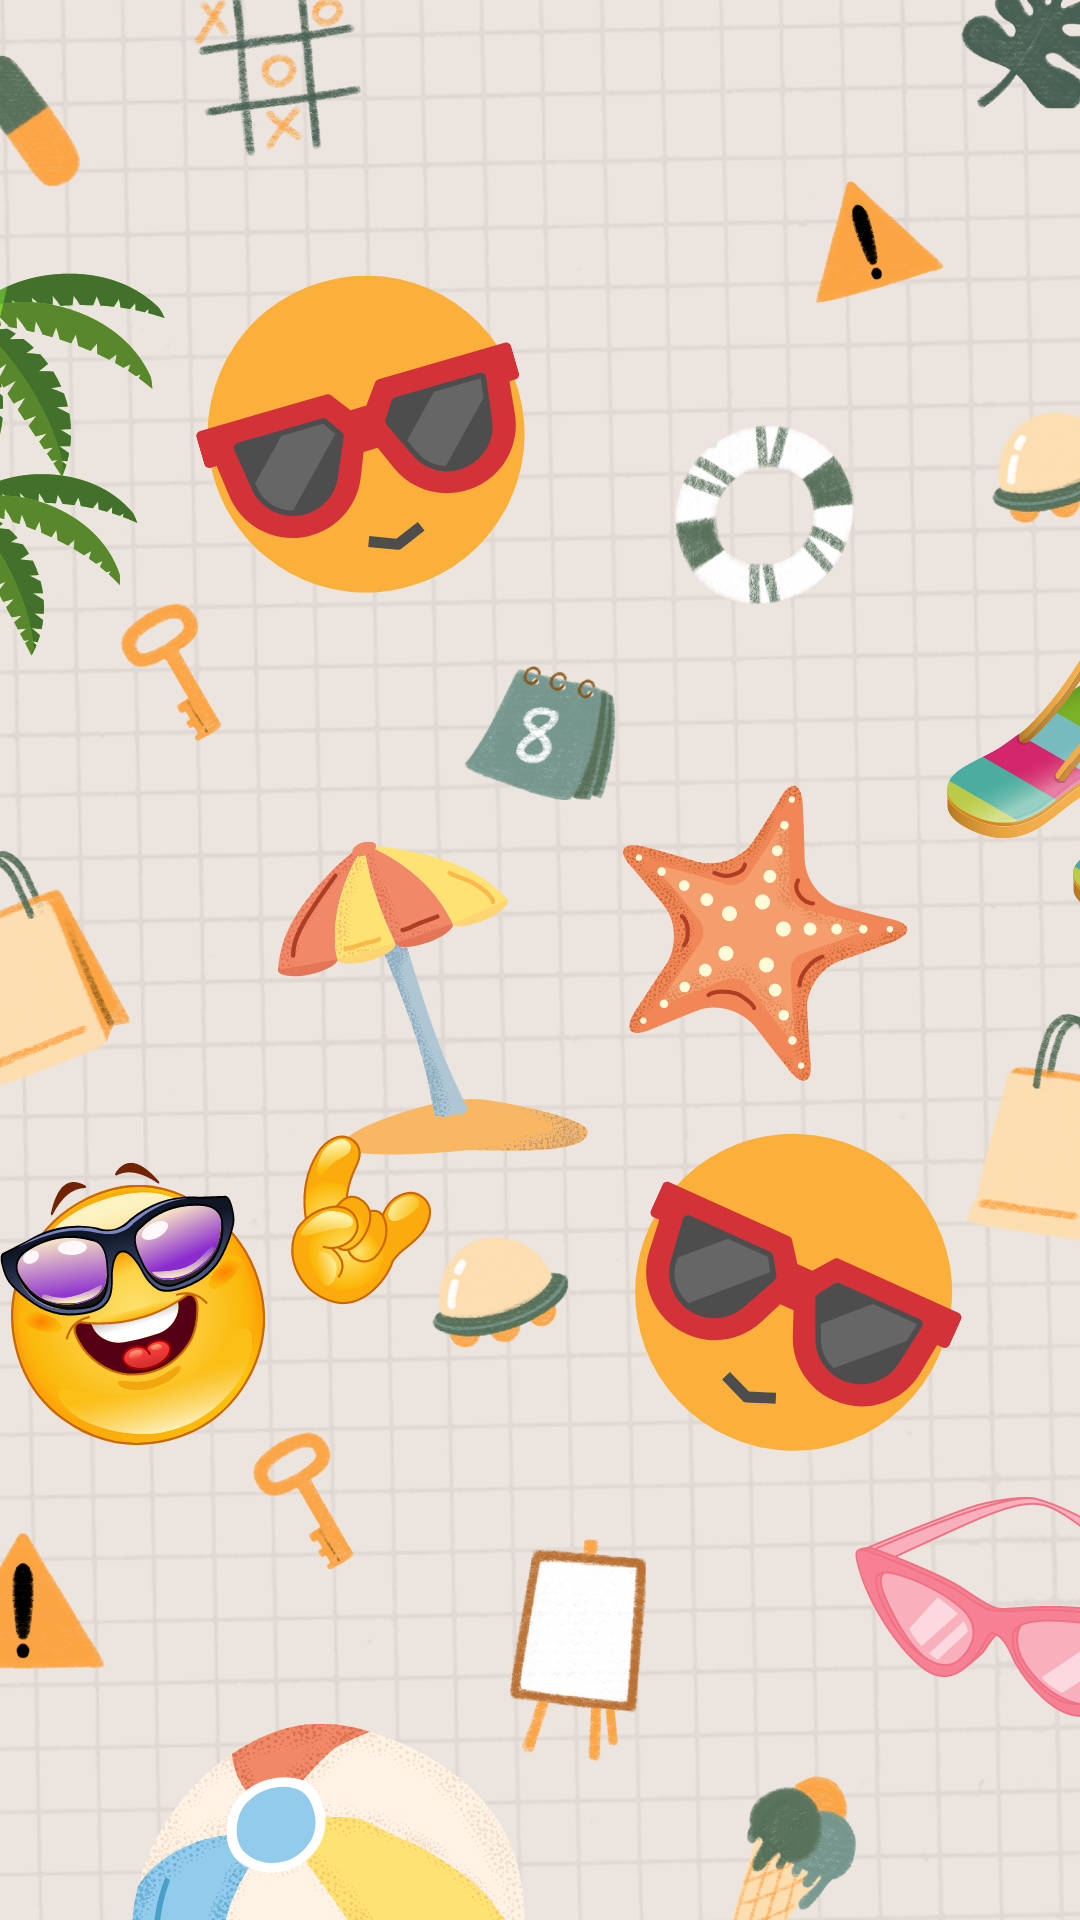 1080X1920 Emoji Wallpaper and Background